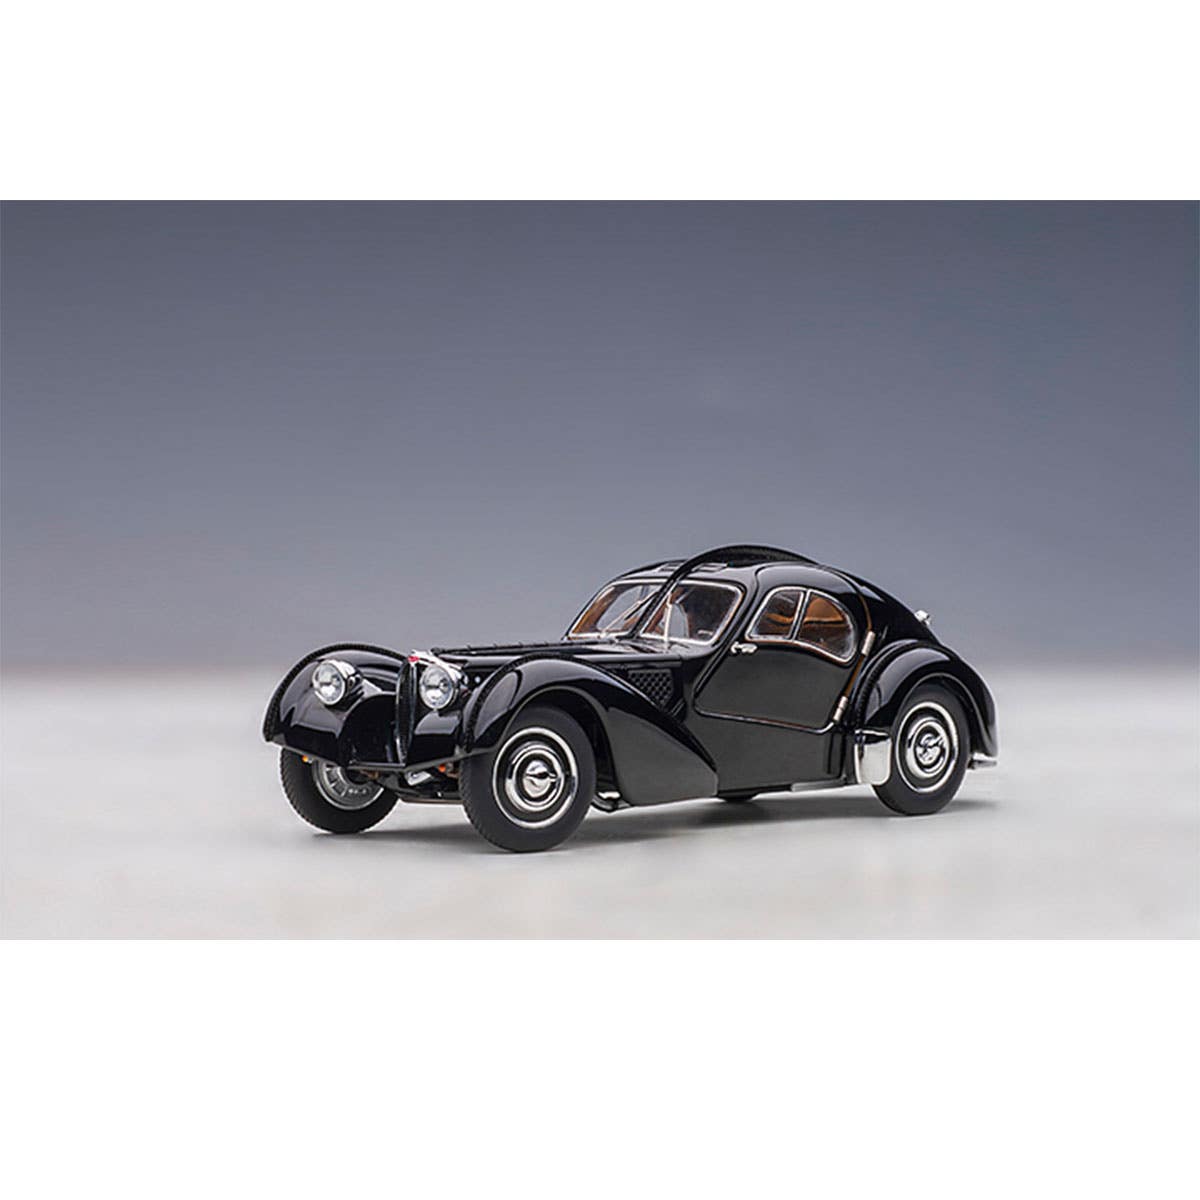 BUGATTI 57SC ATLANTIC 1938 (BLACK/WITH DISC WHEELS) - 1:43 Scale Diecast Model Car